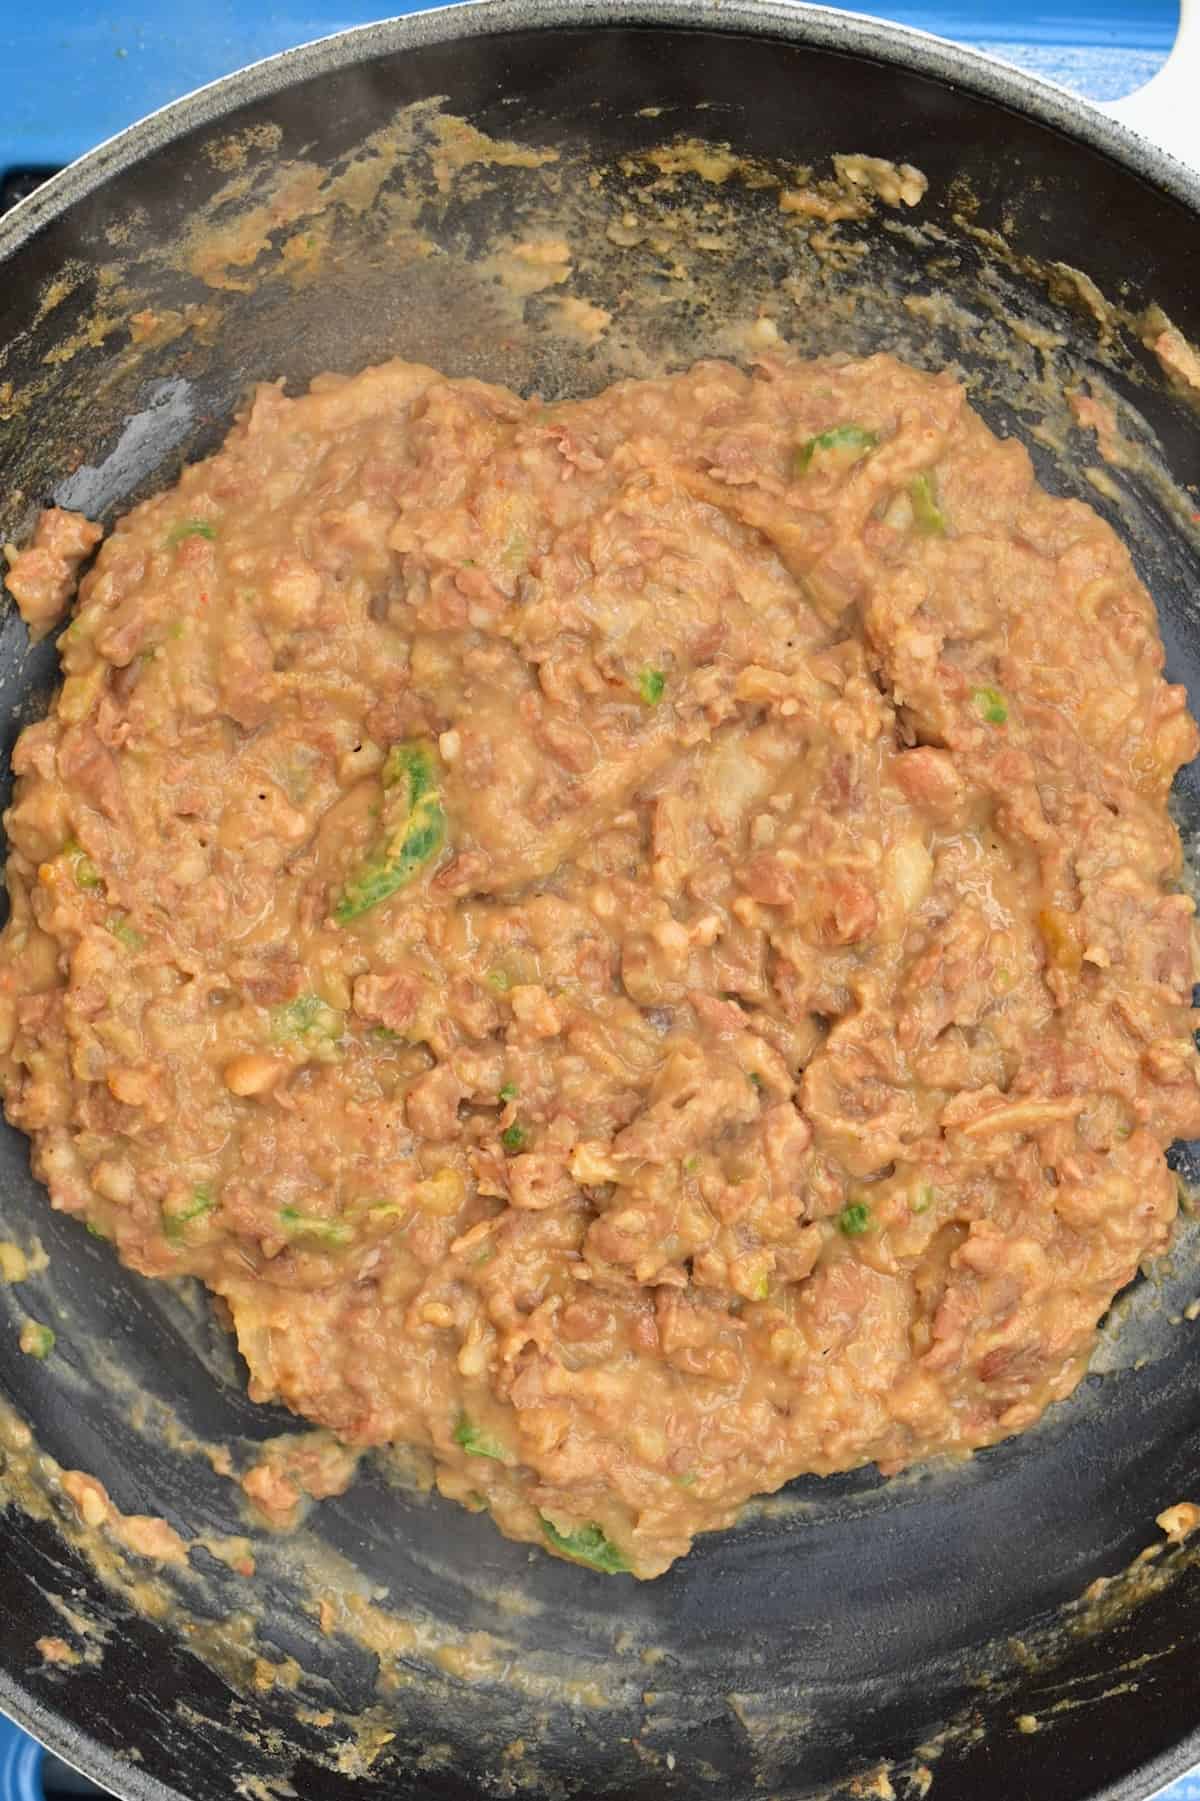 Vegan refried beans in a pan (frijoles refritos)